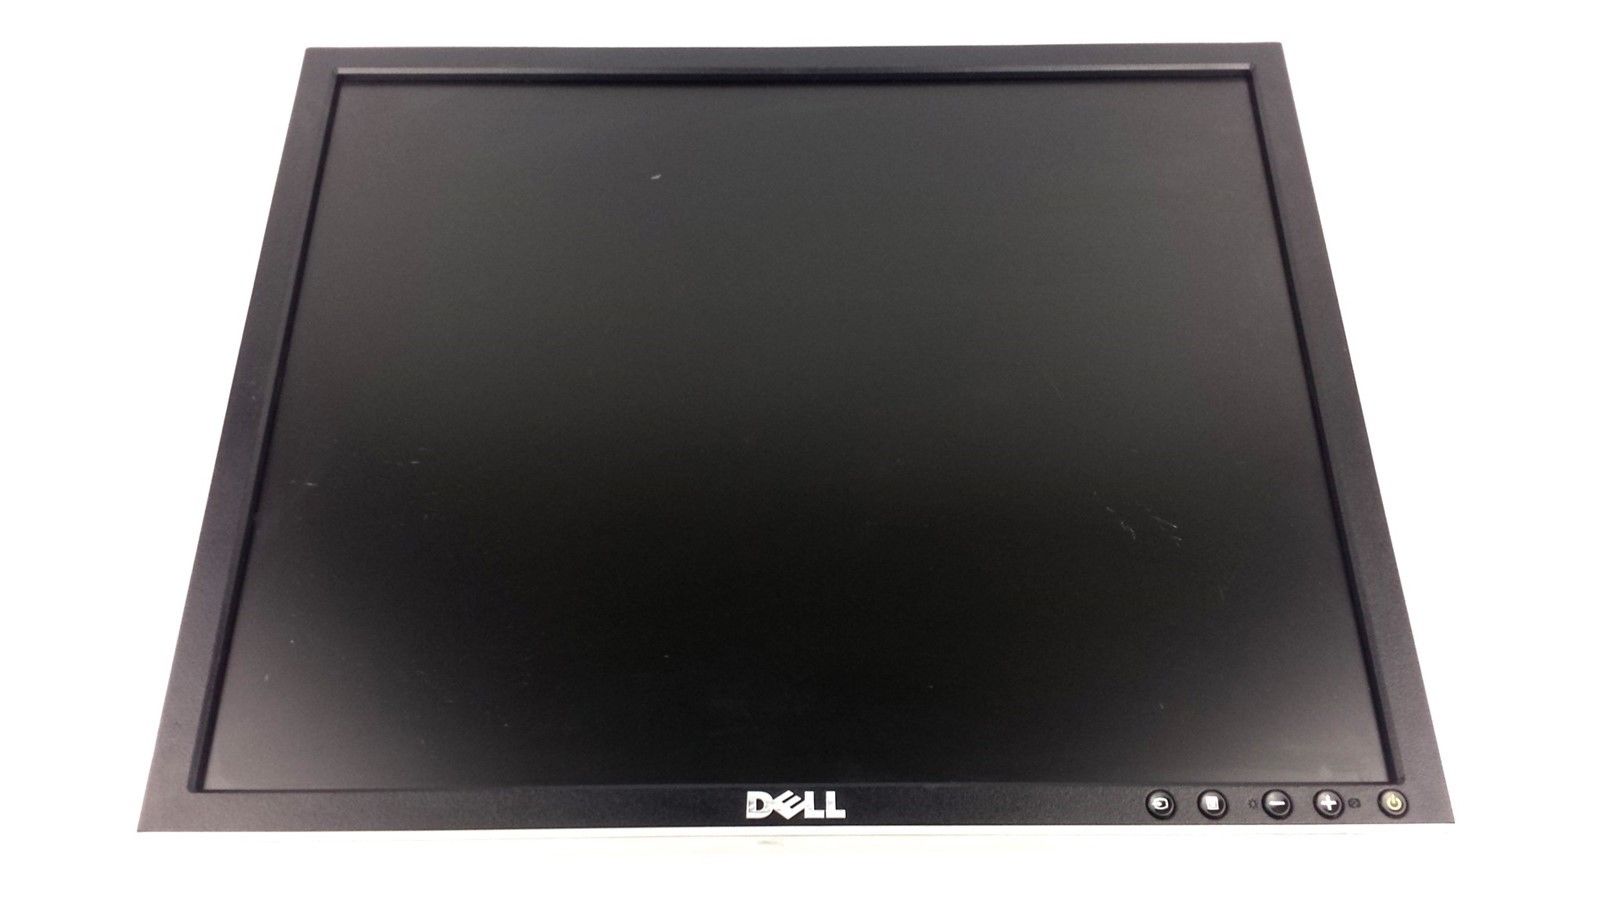 Dell UltraSharp 1908FPc FHD LCD Computer Monitor 19" G554F w/ Power & VGA Cord